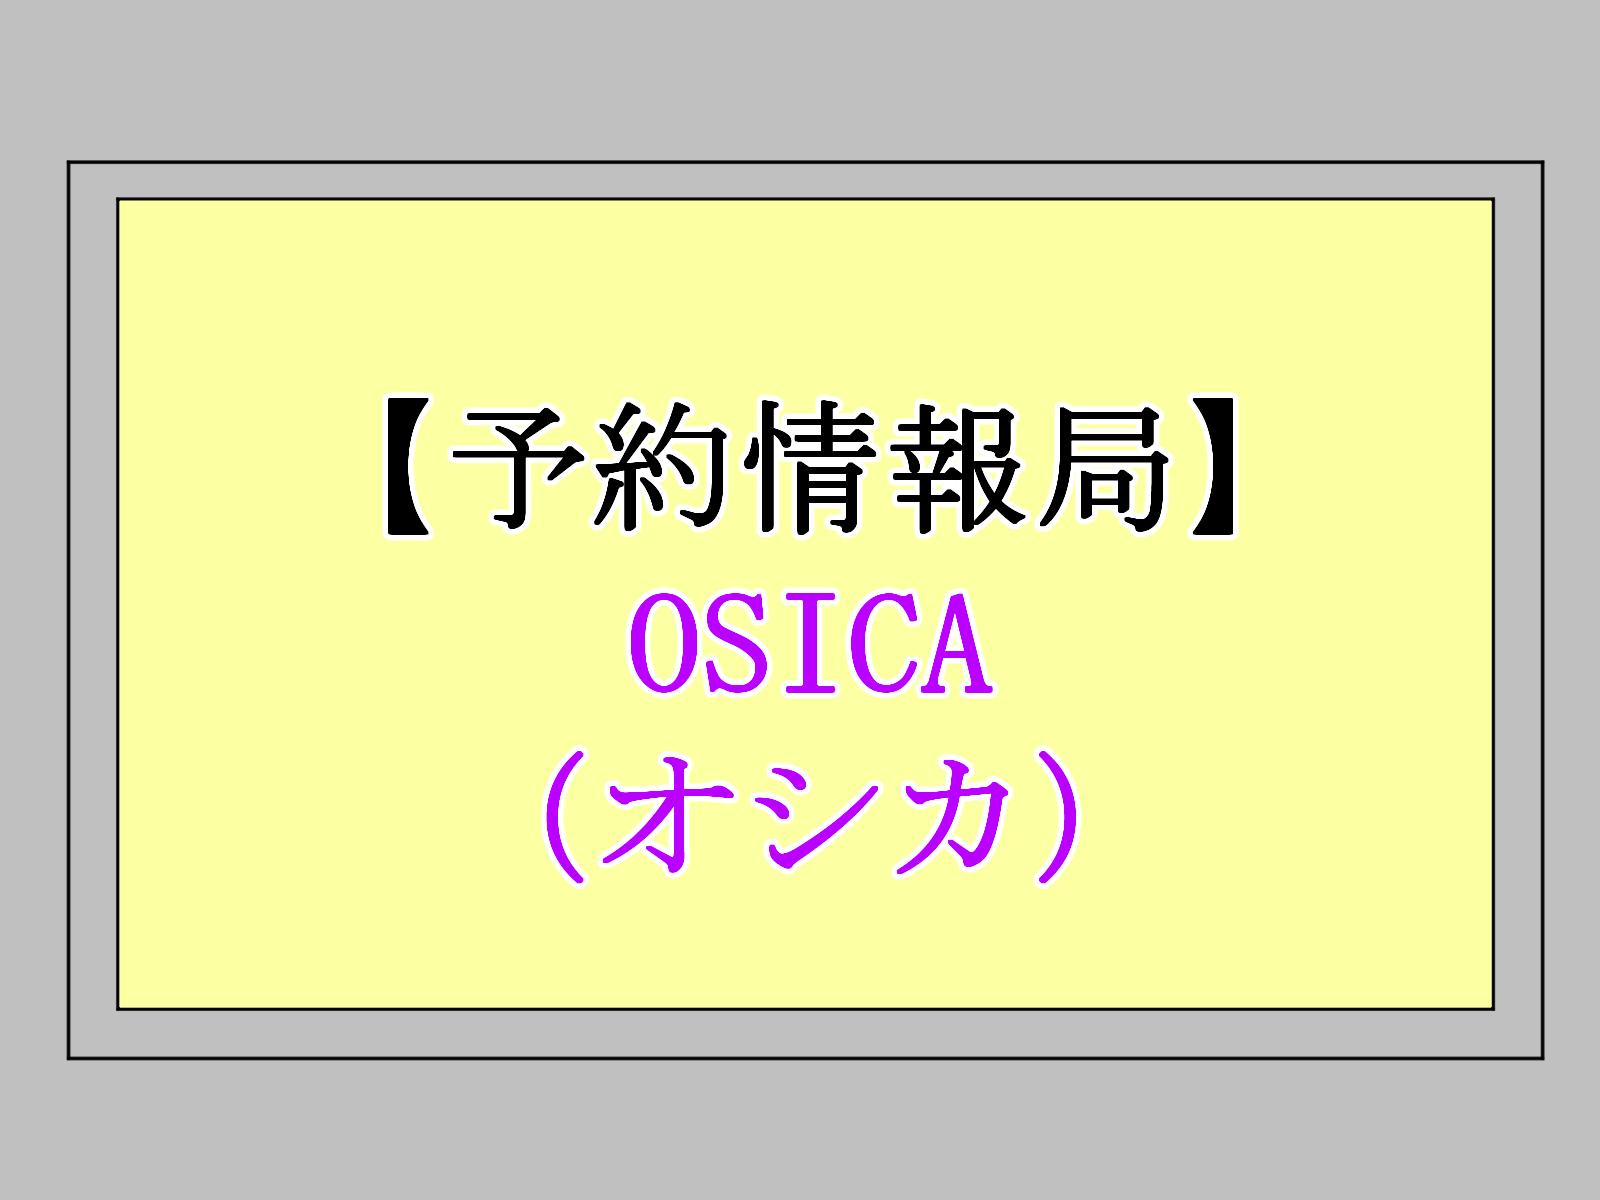 OSICA予約情報のアイキャッチ画像。